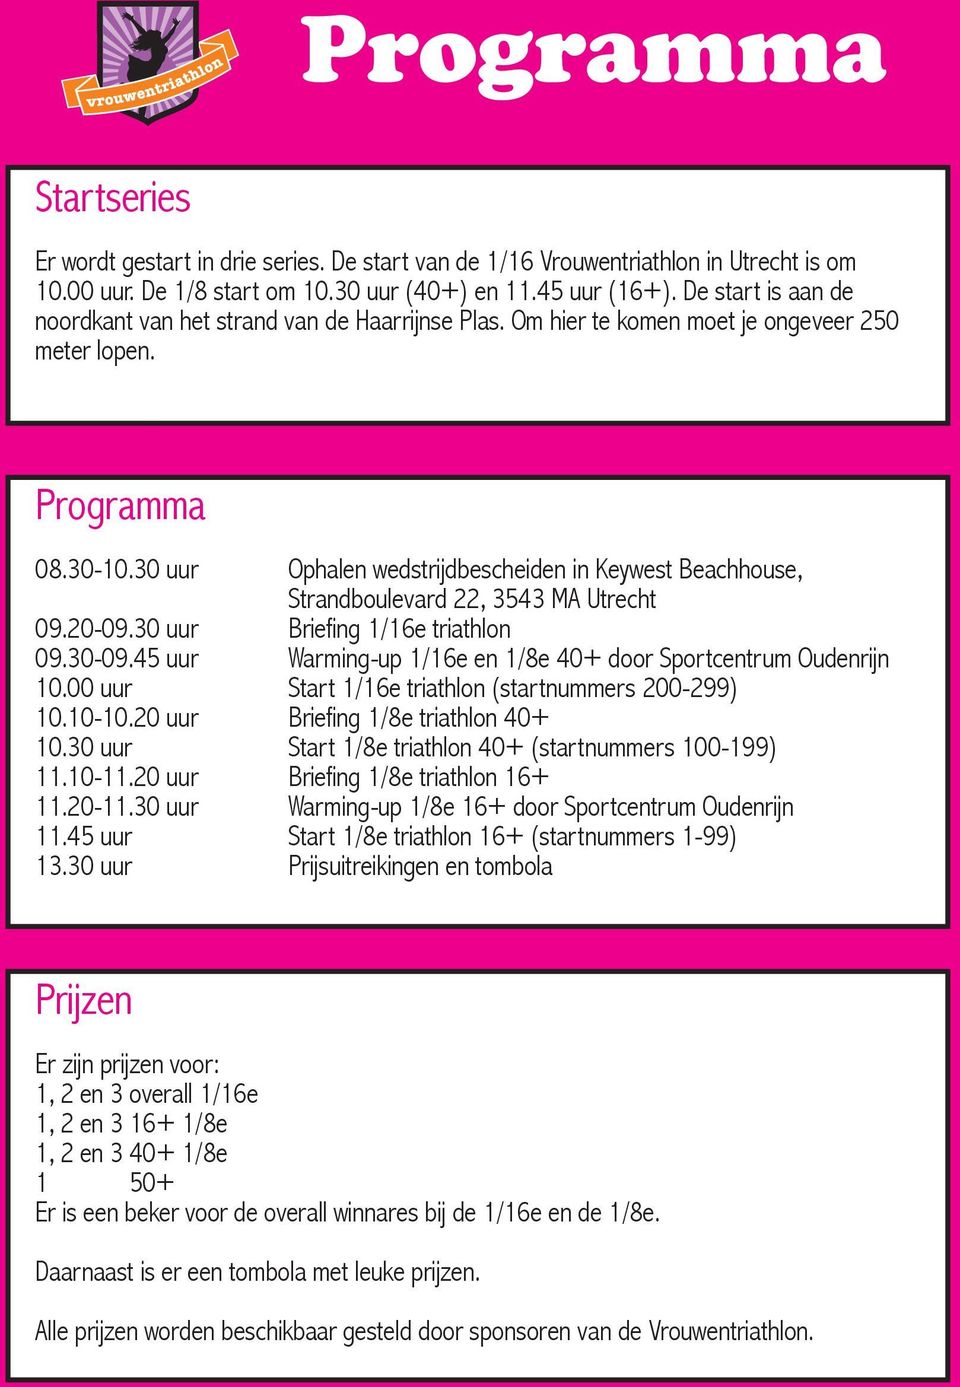 30 uur Ophalen wedstrijdbescheiden in Keywest Beachhouse, Strandboulevard 22, 3543 MA Utrecht 09.20-09.30 uur Briefing 1/16e triathlon 09.30-09.